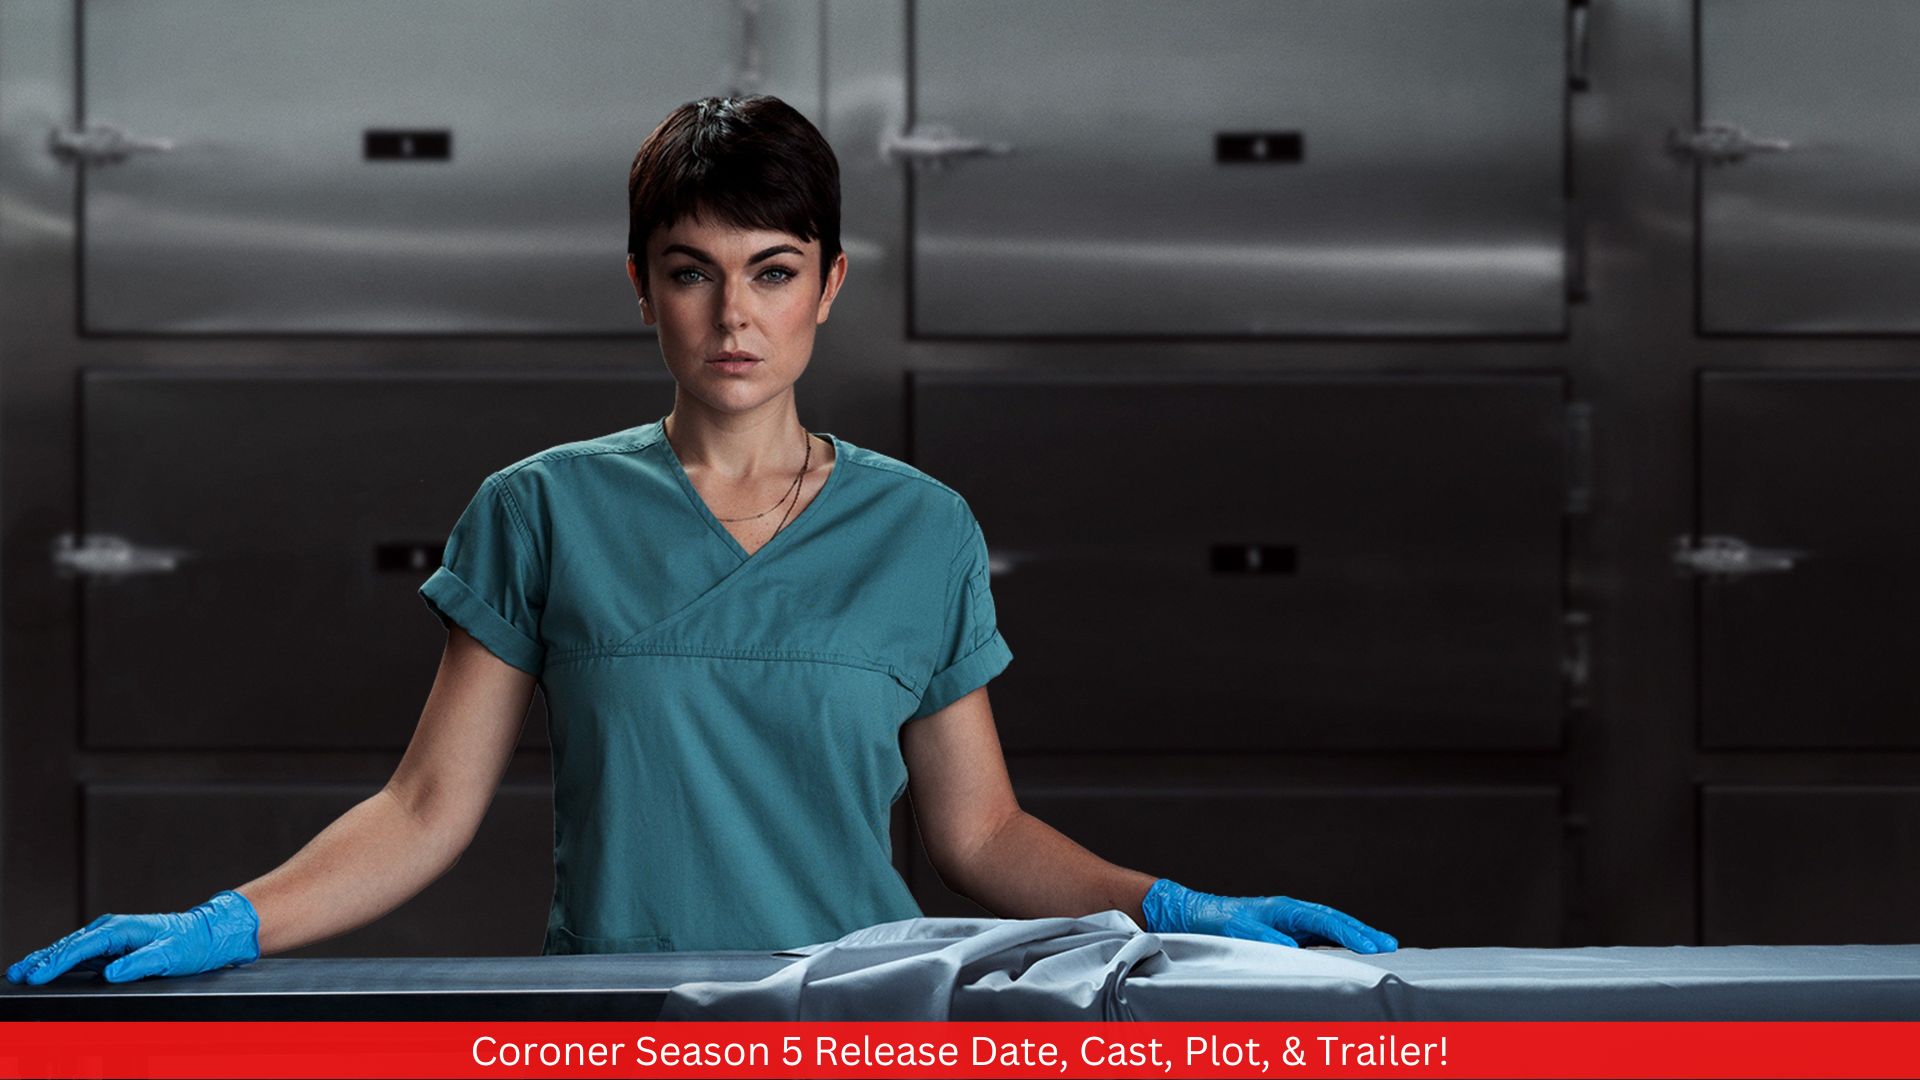 Coroner Season 5 Release Date, Cast, Plot, & Trailer!